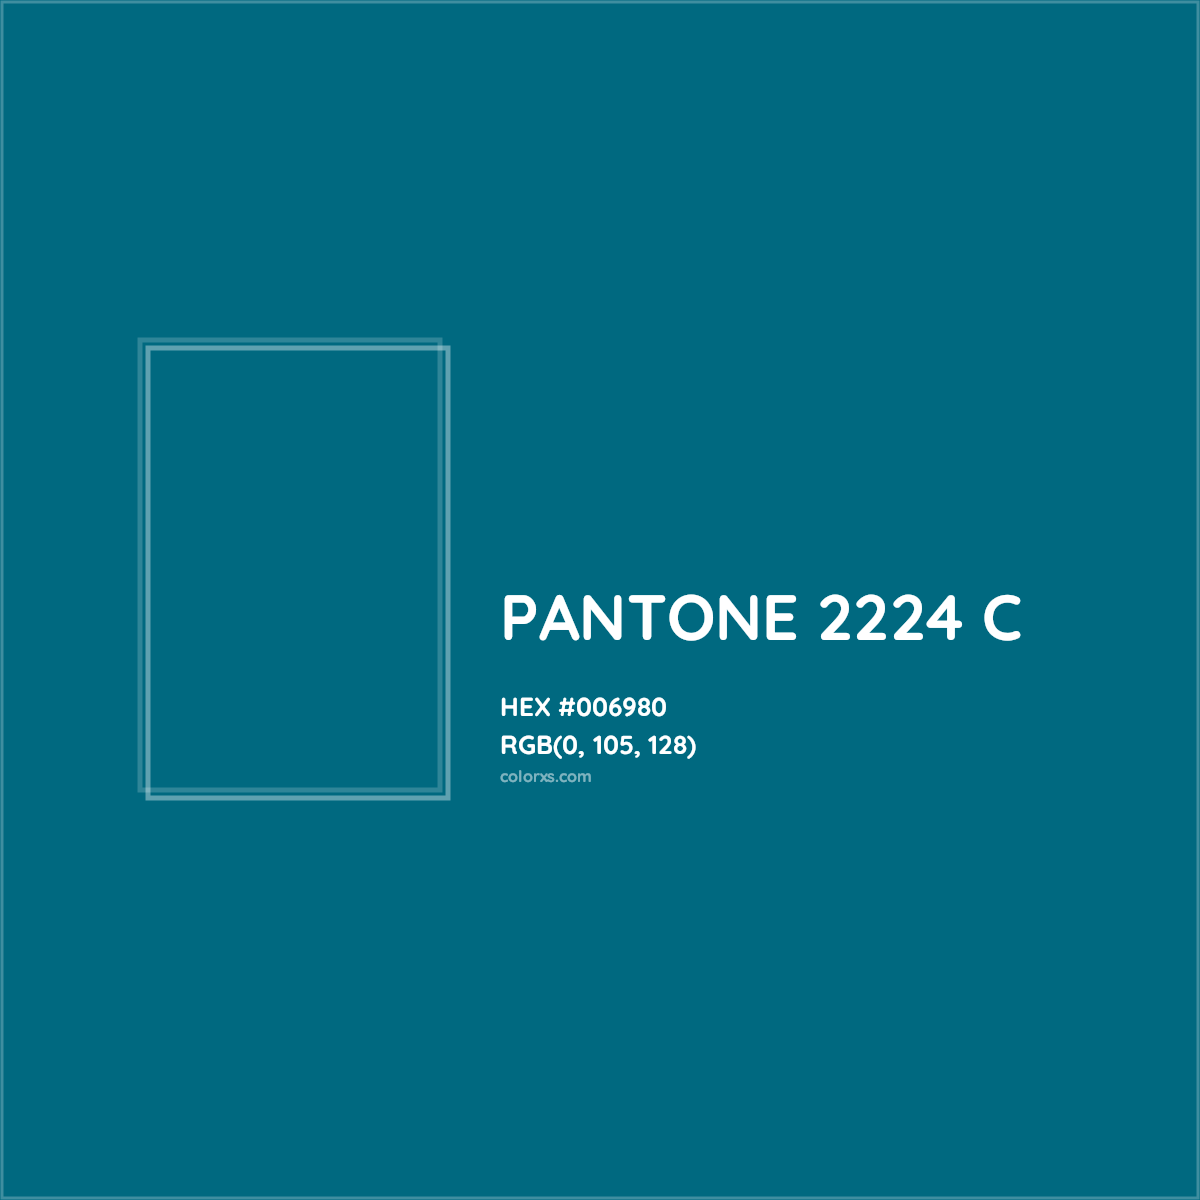 HEX #006980 PANTONE 2224 C CMS Pantone PMS - Color Code